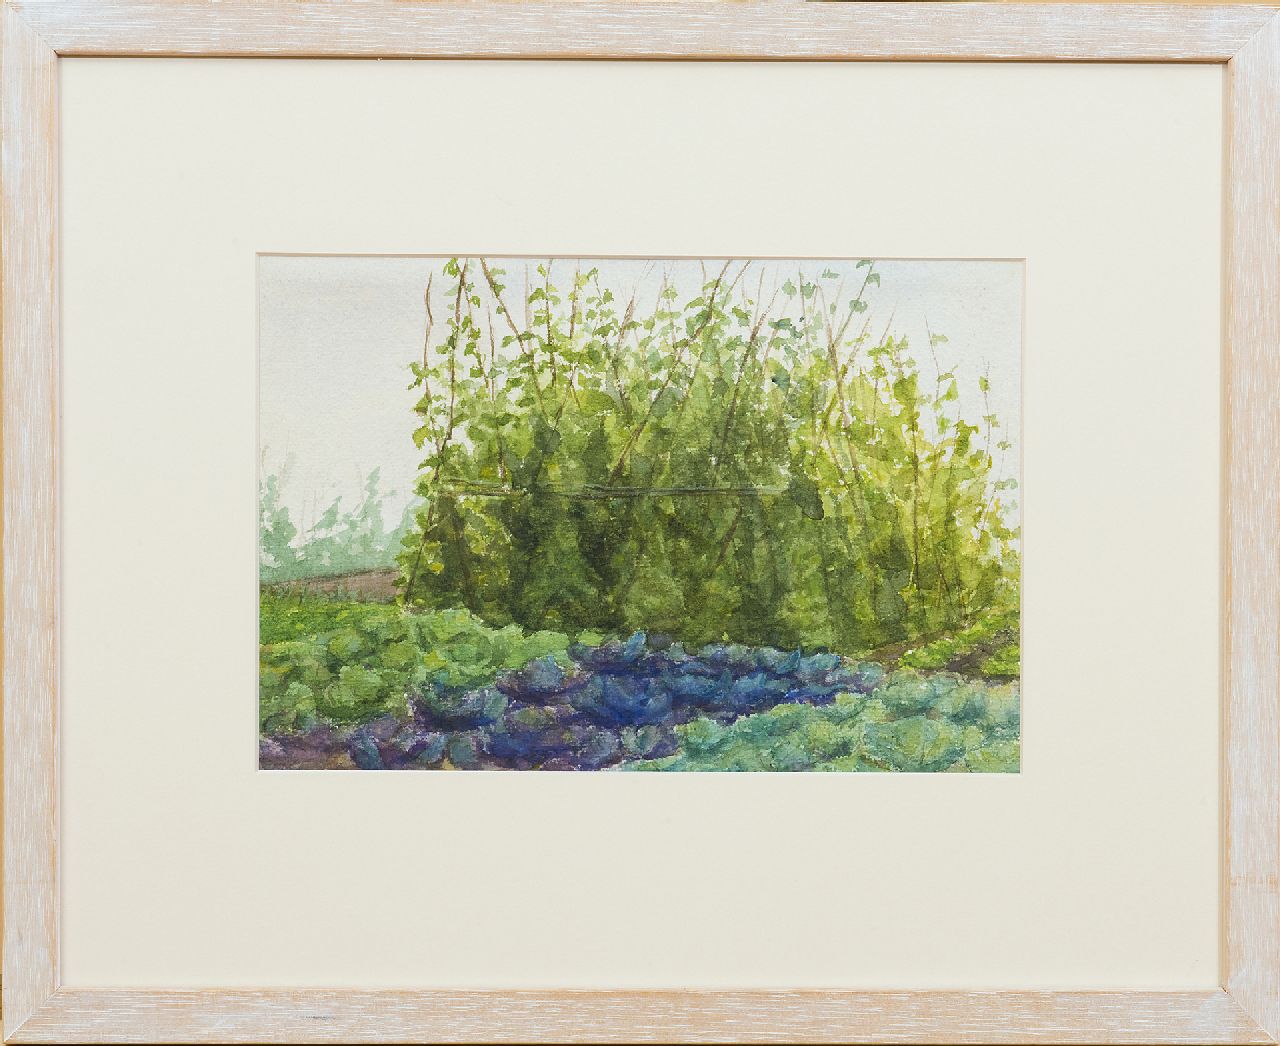 Fritzlin M.C.L.  | Maria Charlotta 'Louise' Fritzlin, Moestuin, aquarel op papier 18,7 x 27,6 cm, gedateerd '97 verso